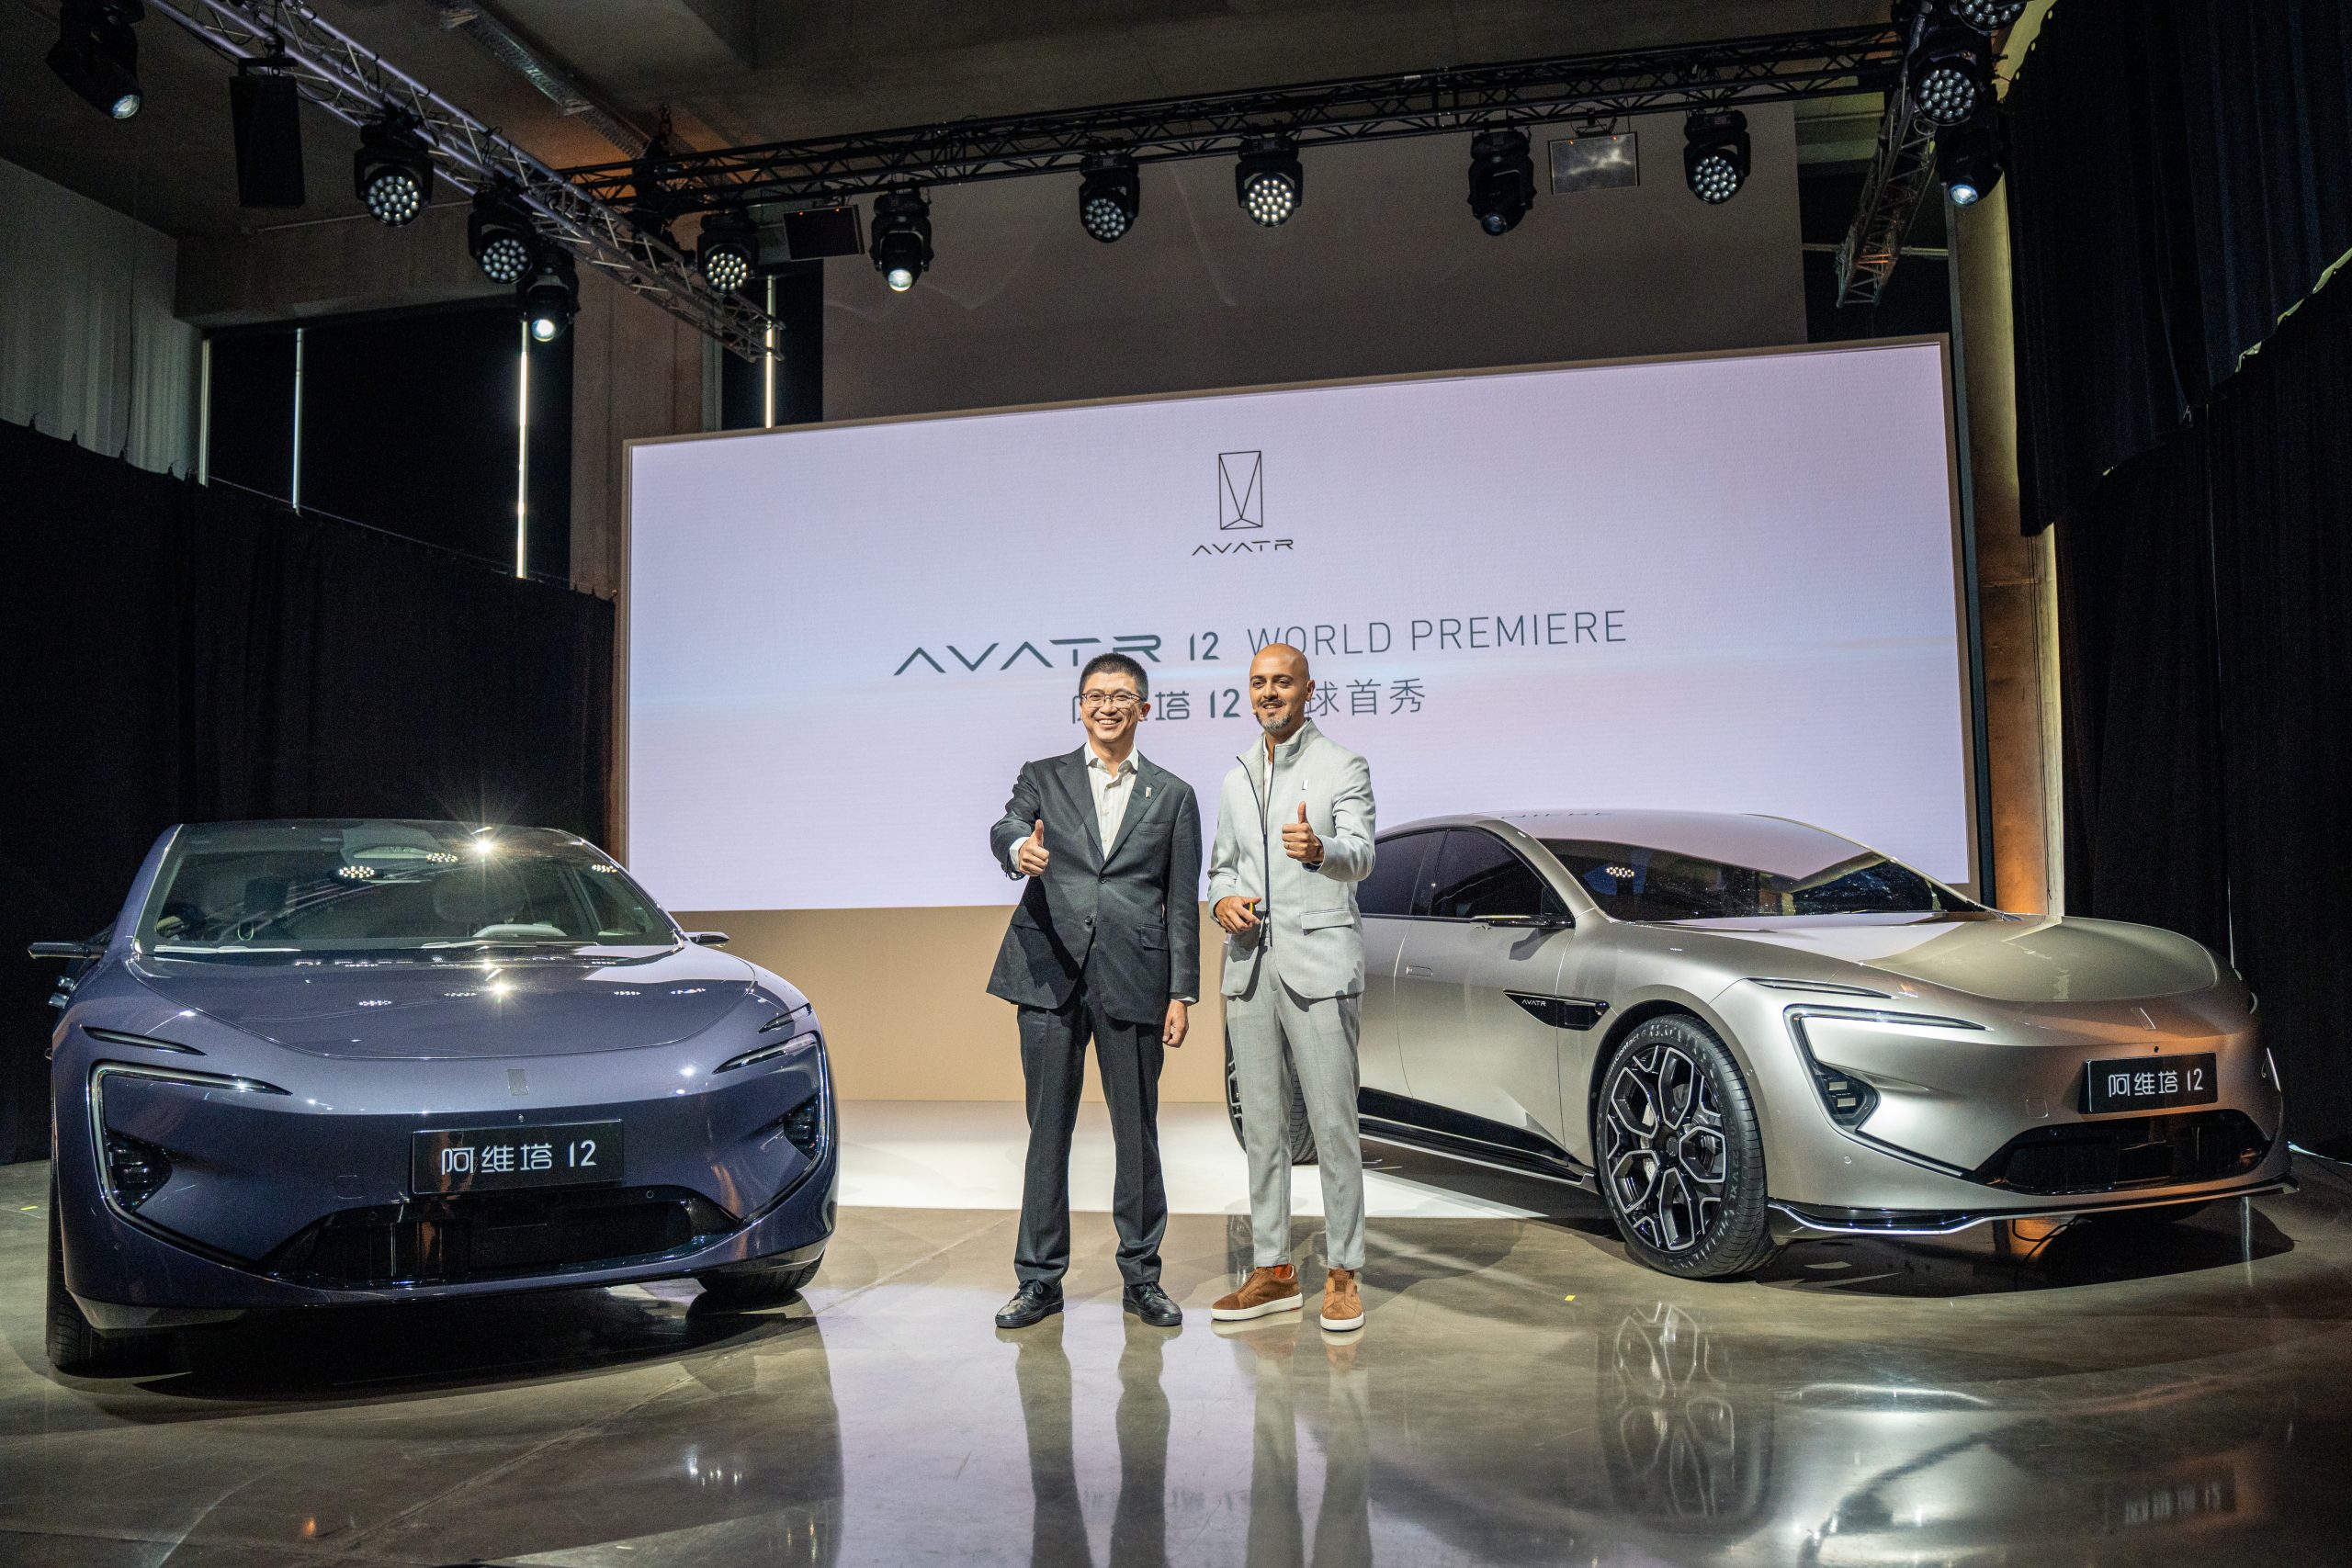 Avatr Revolutionizes Automobile Design with 12